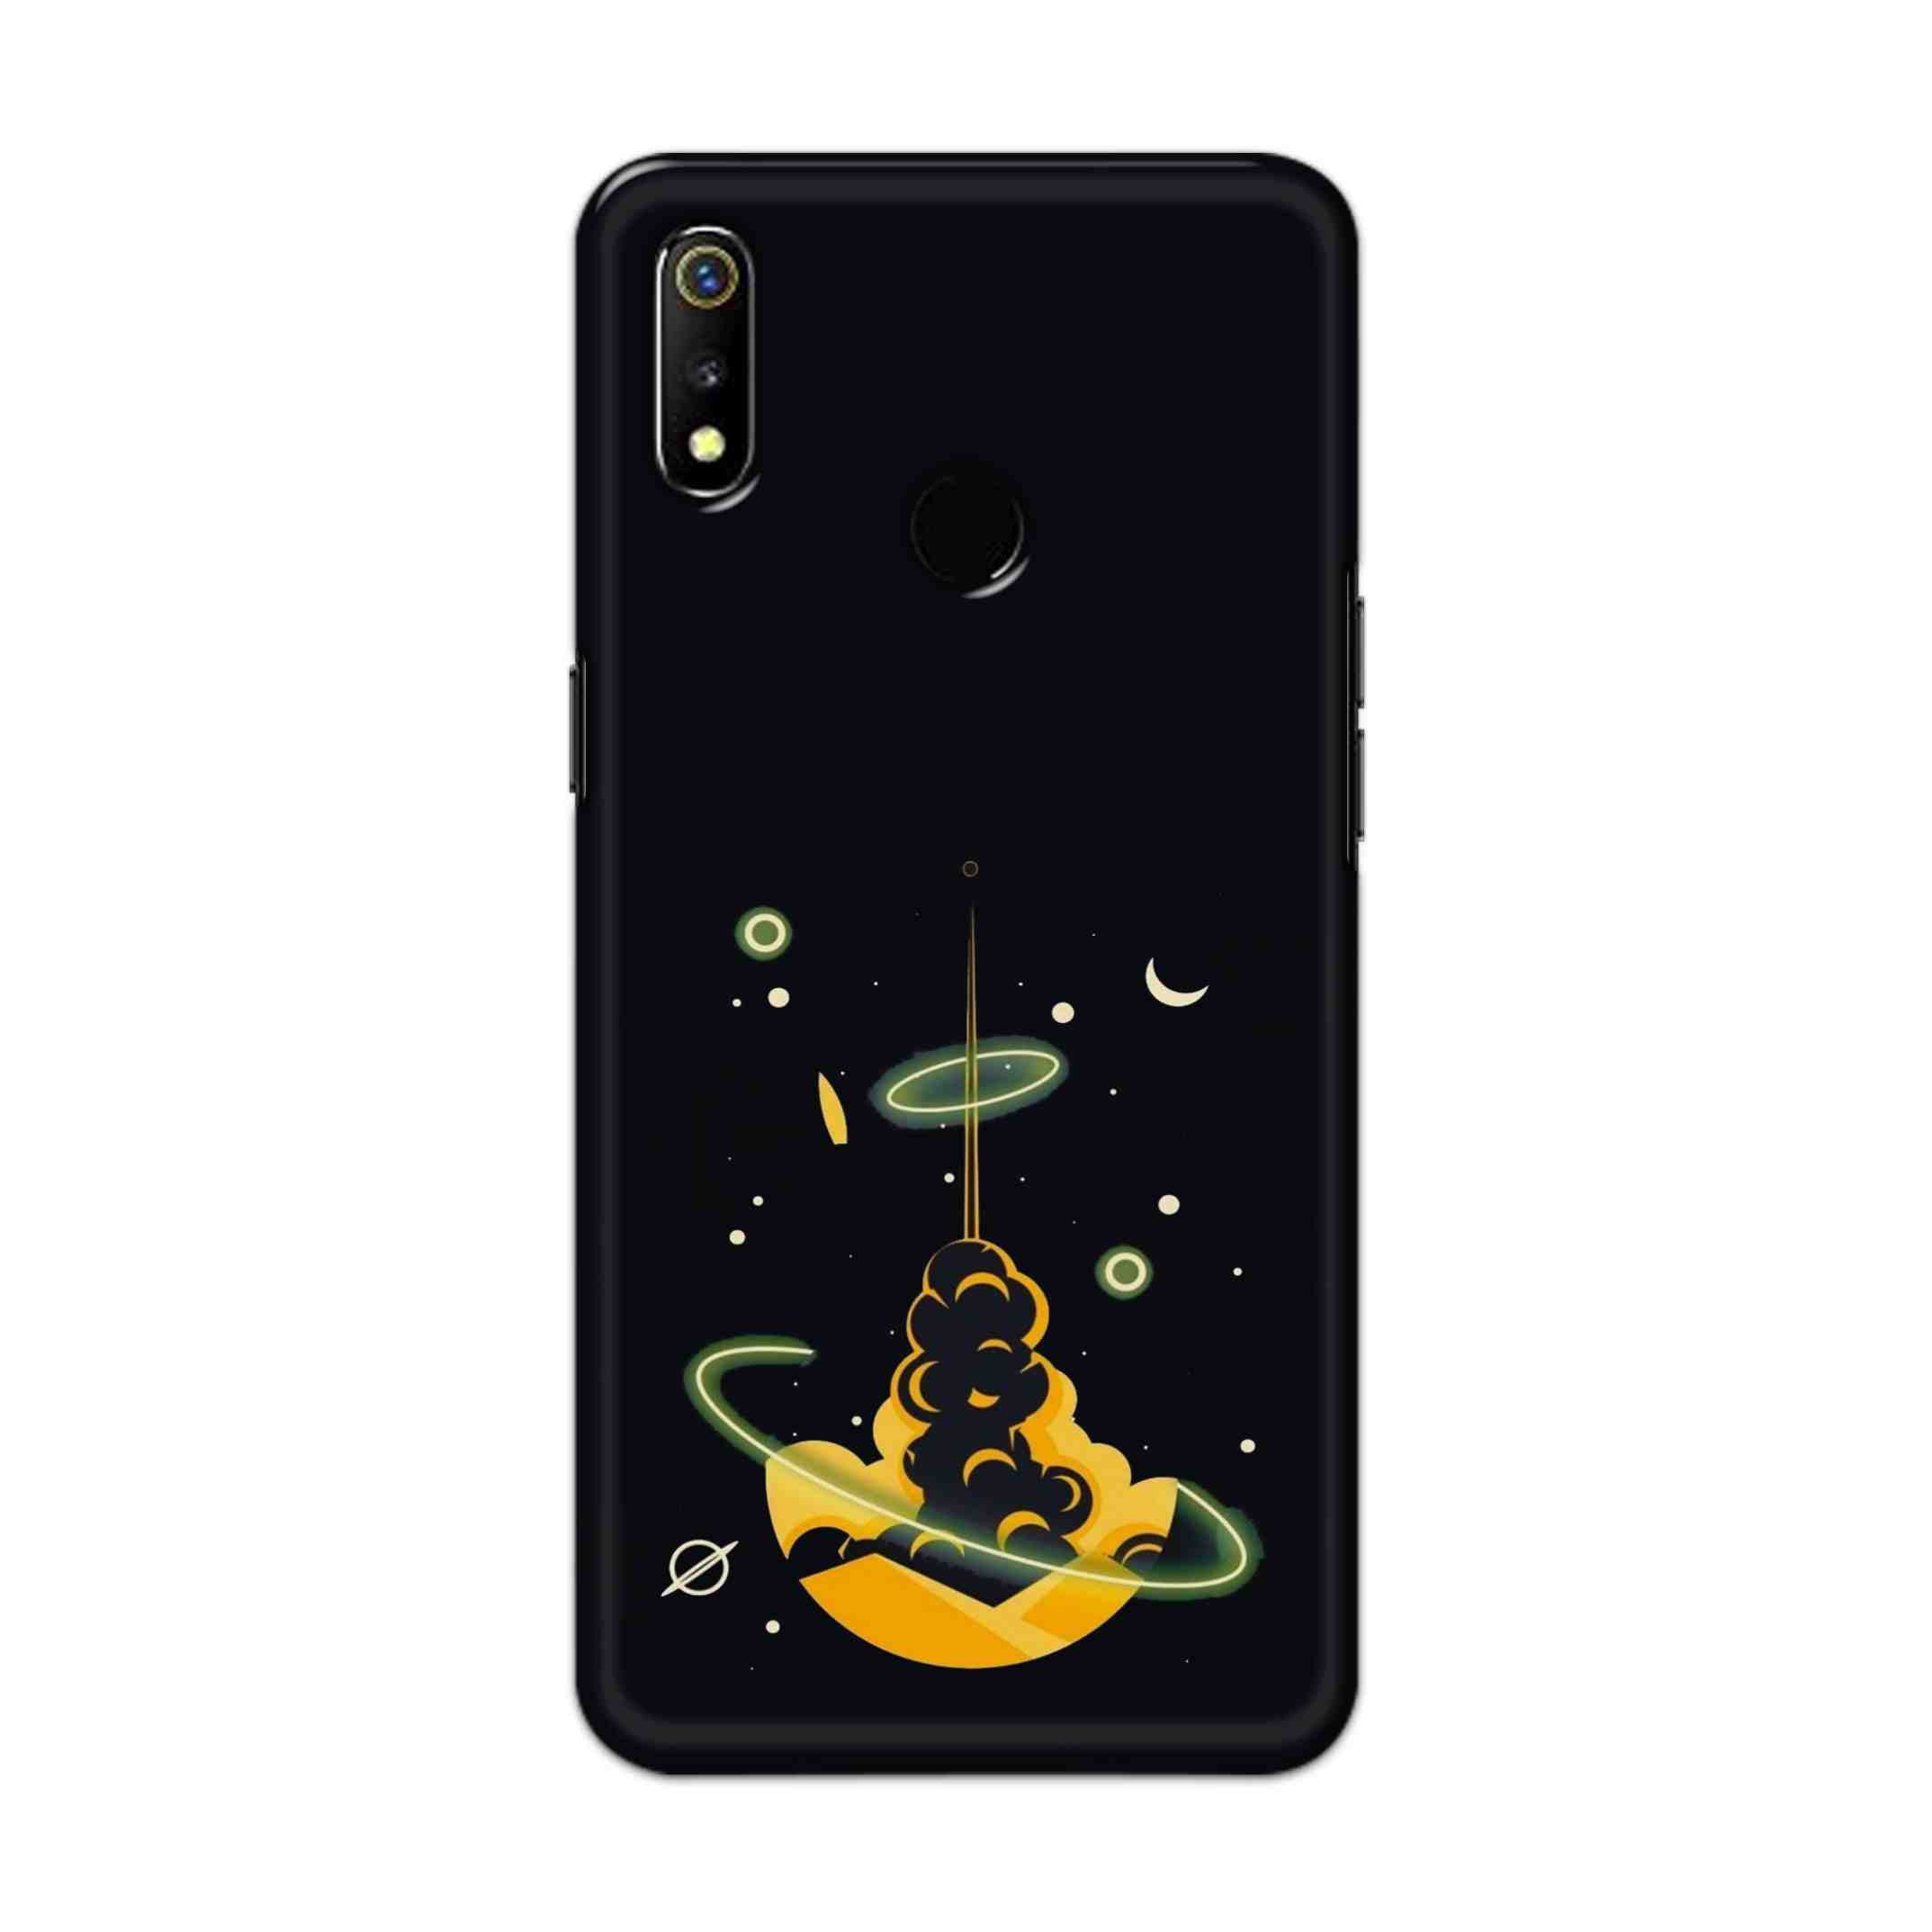 Buy Moon Hard Back Mobile Phone Case Cover For Oppo Realme 3 Online